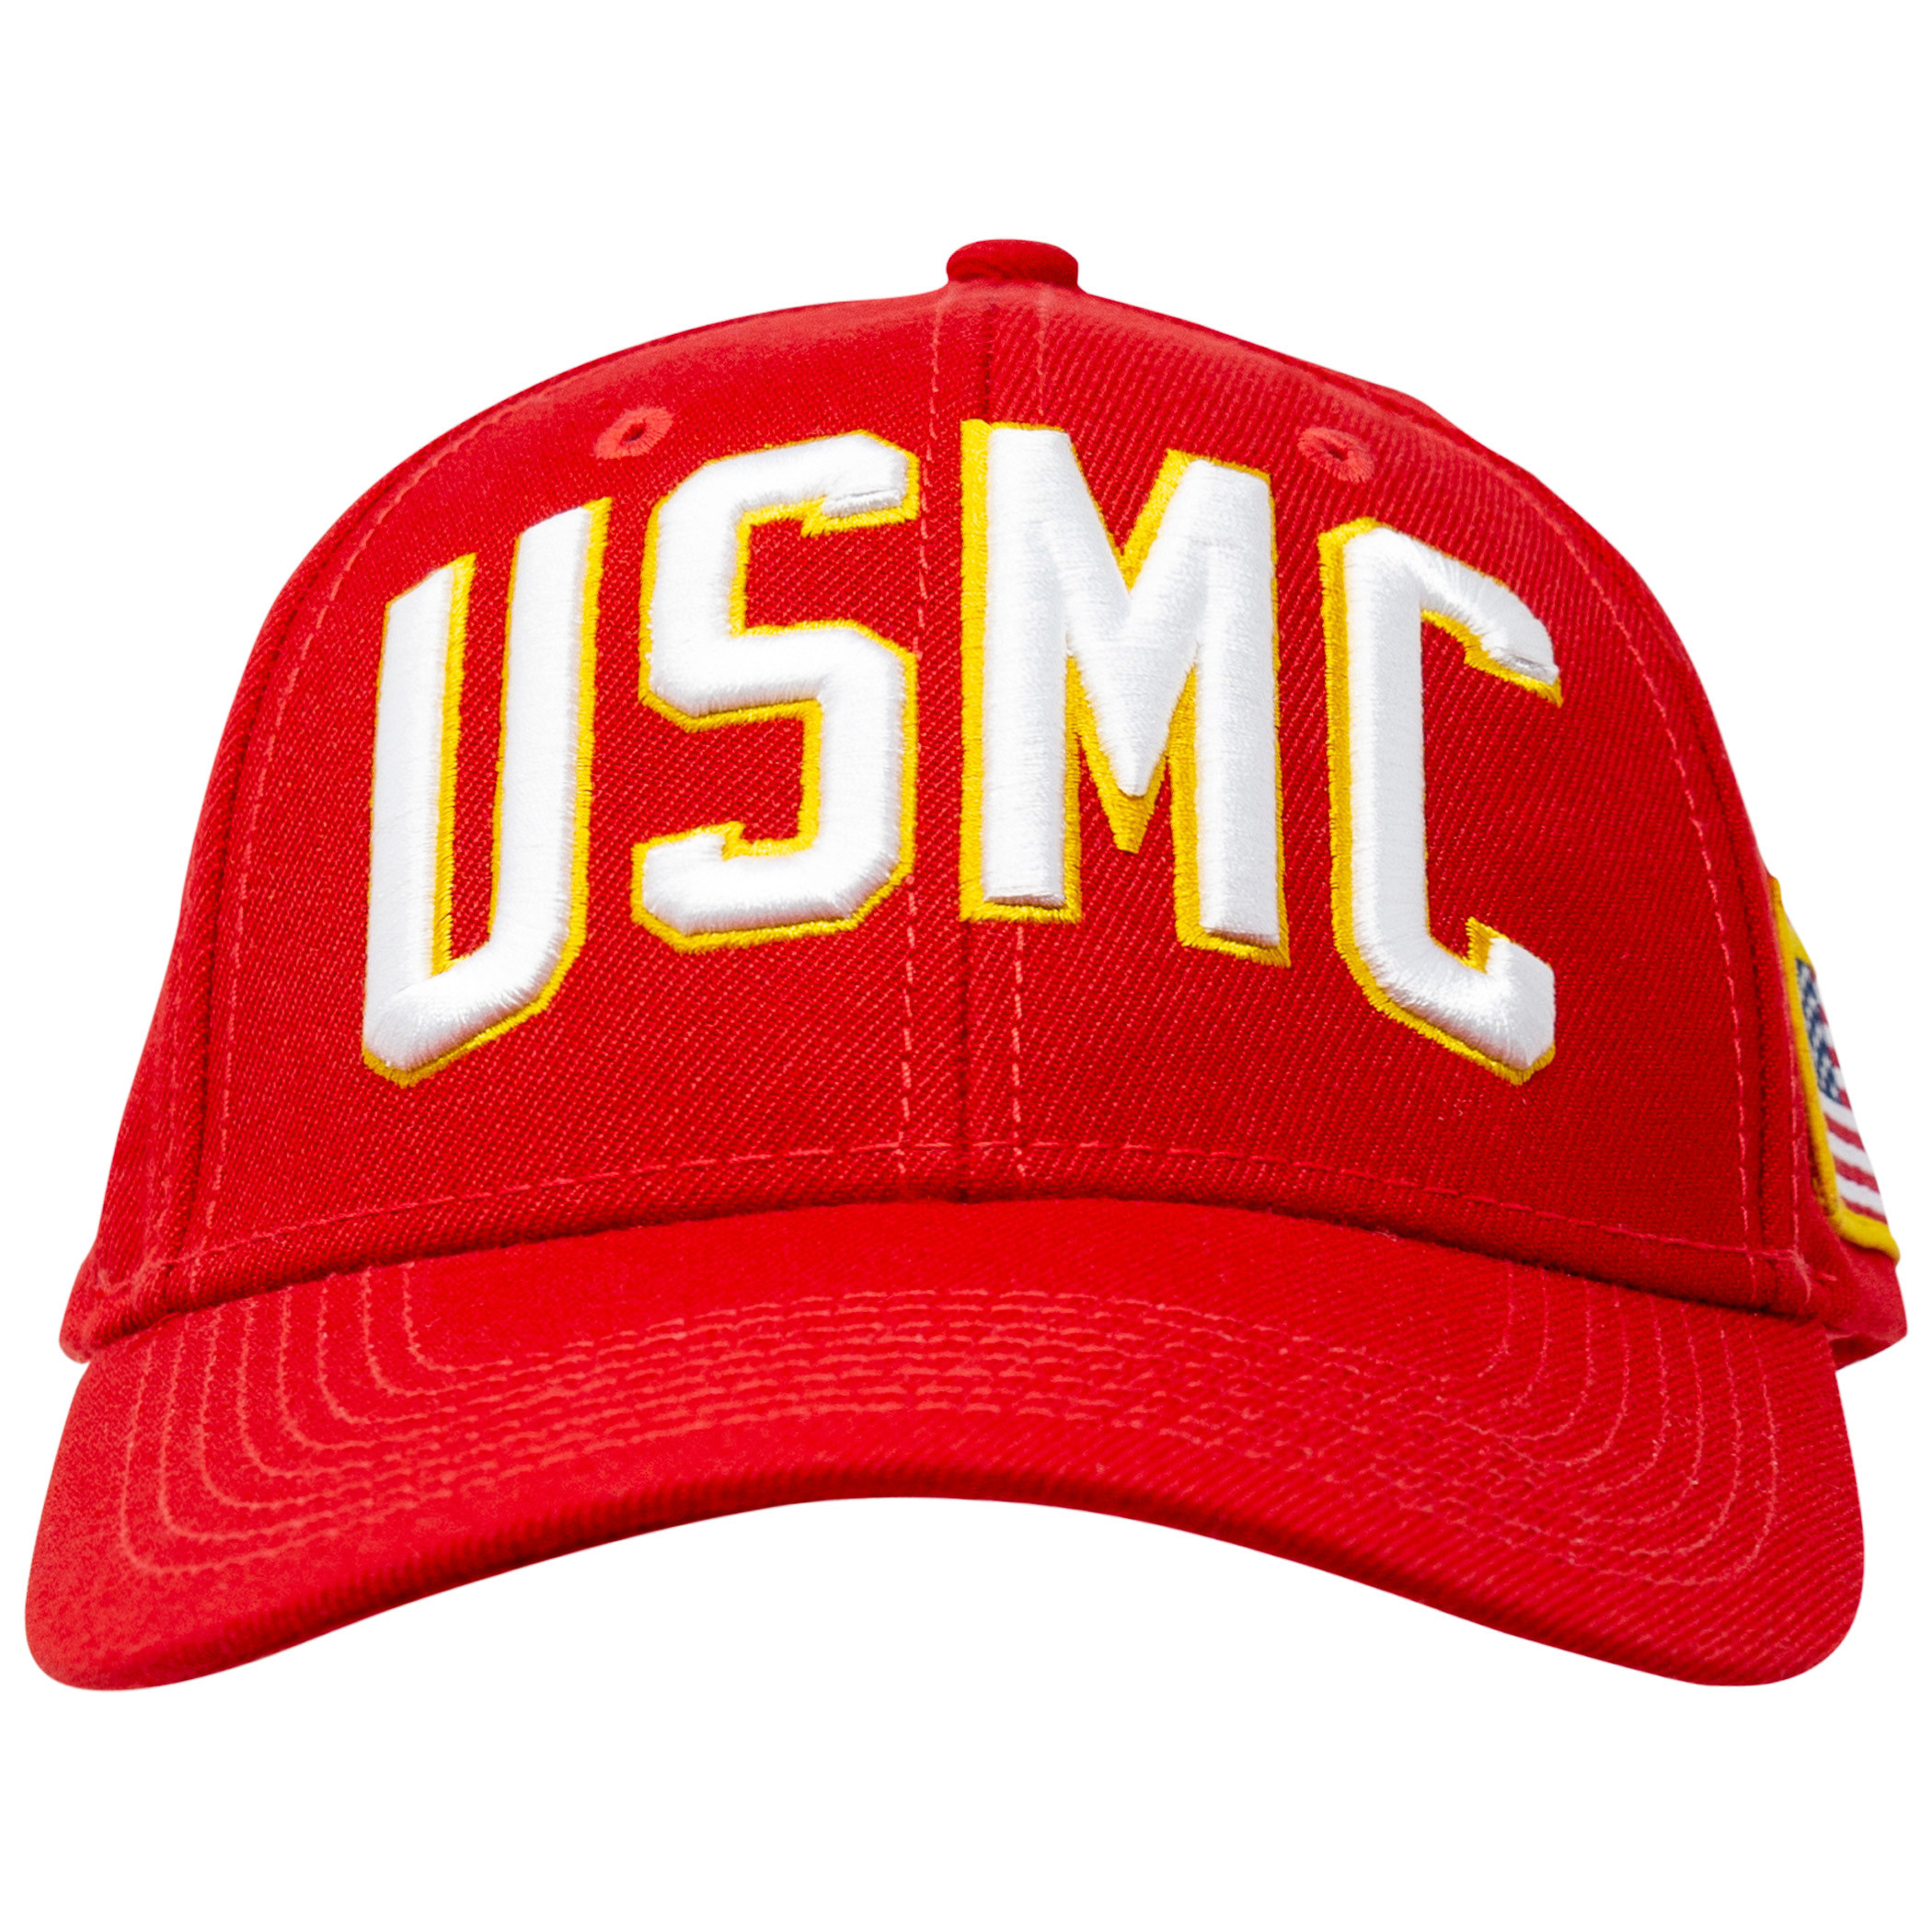 USMC Adjustable Red Snapback Hat